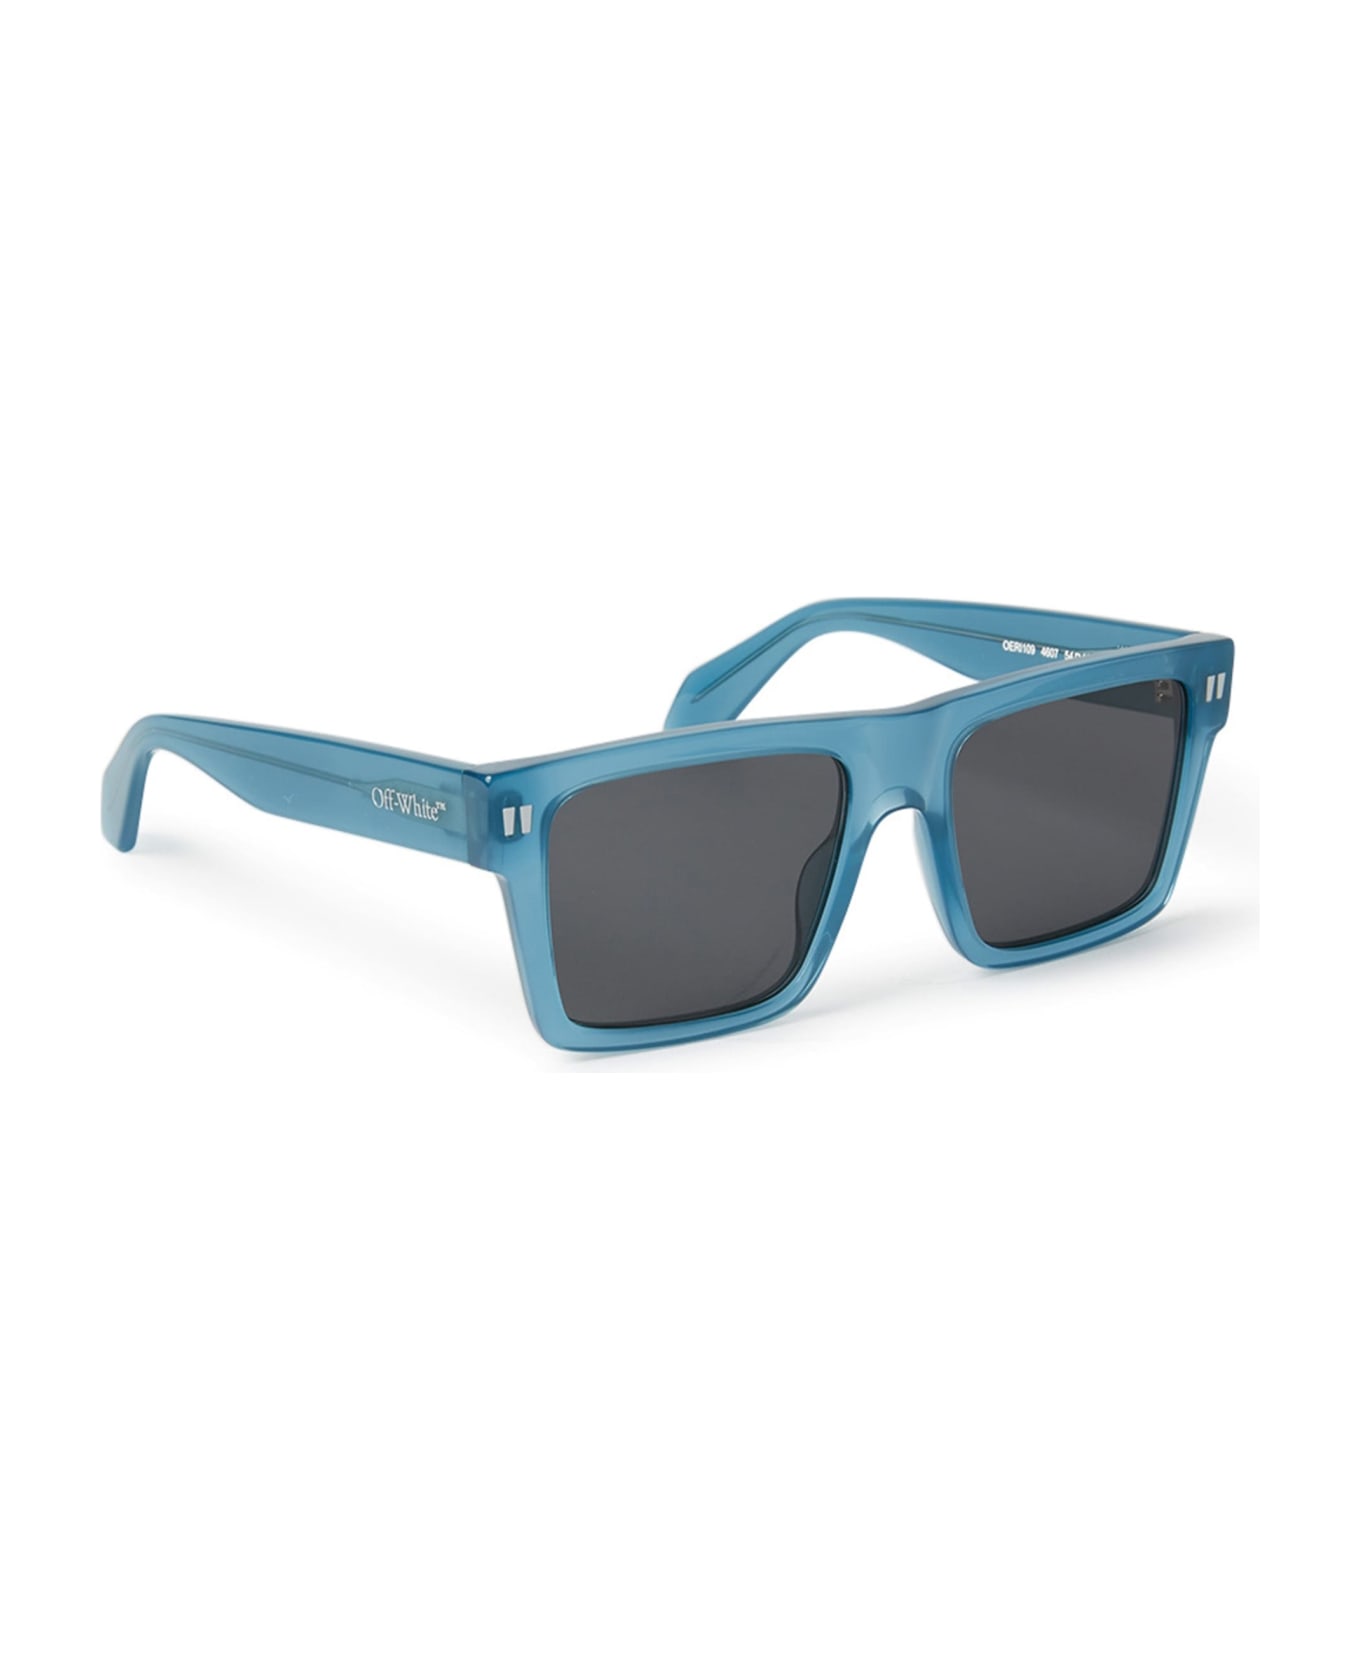 Off-White Lawton Sunglasses - blue